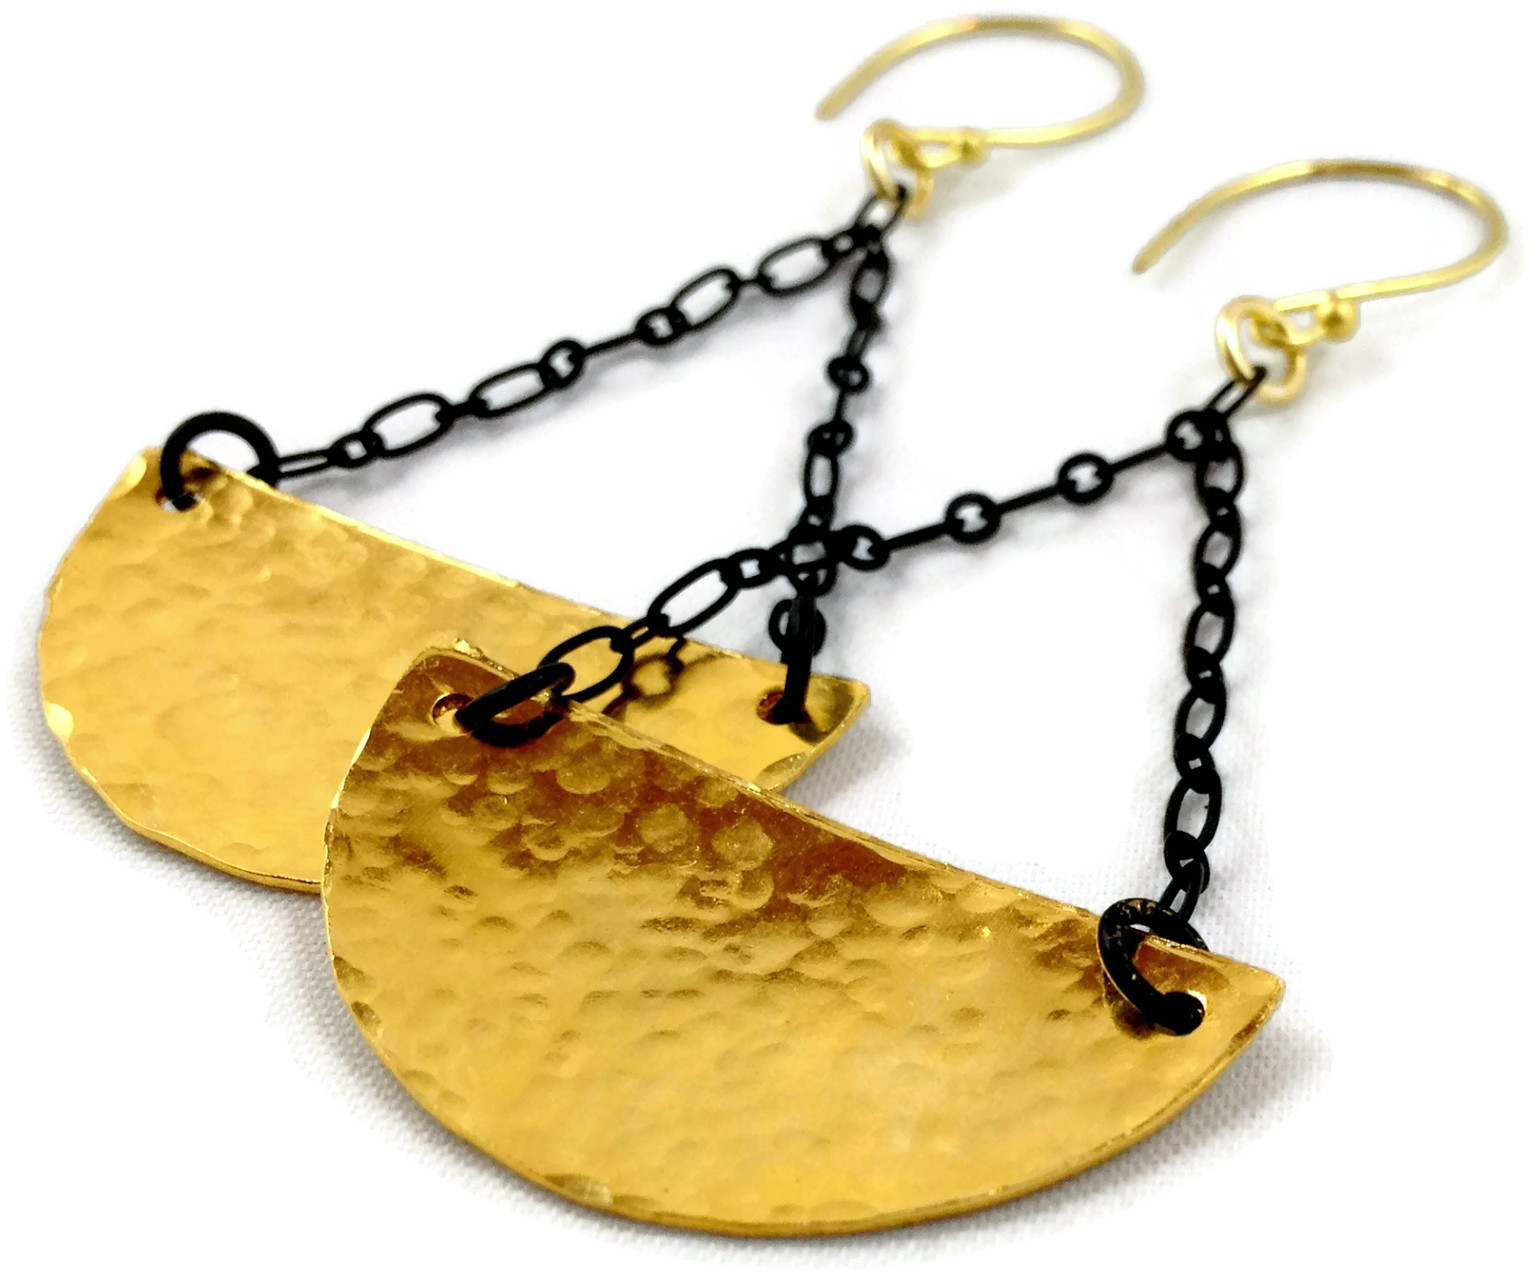 "Bonnie" Golden Arc Earrings by Christi Schimpke of Minabea Jewelry